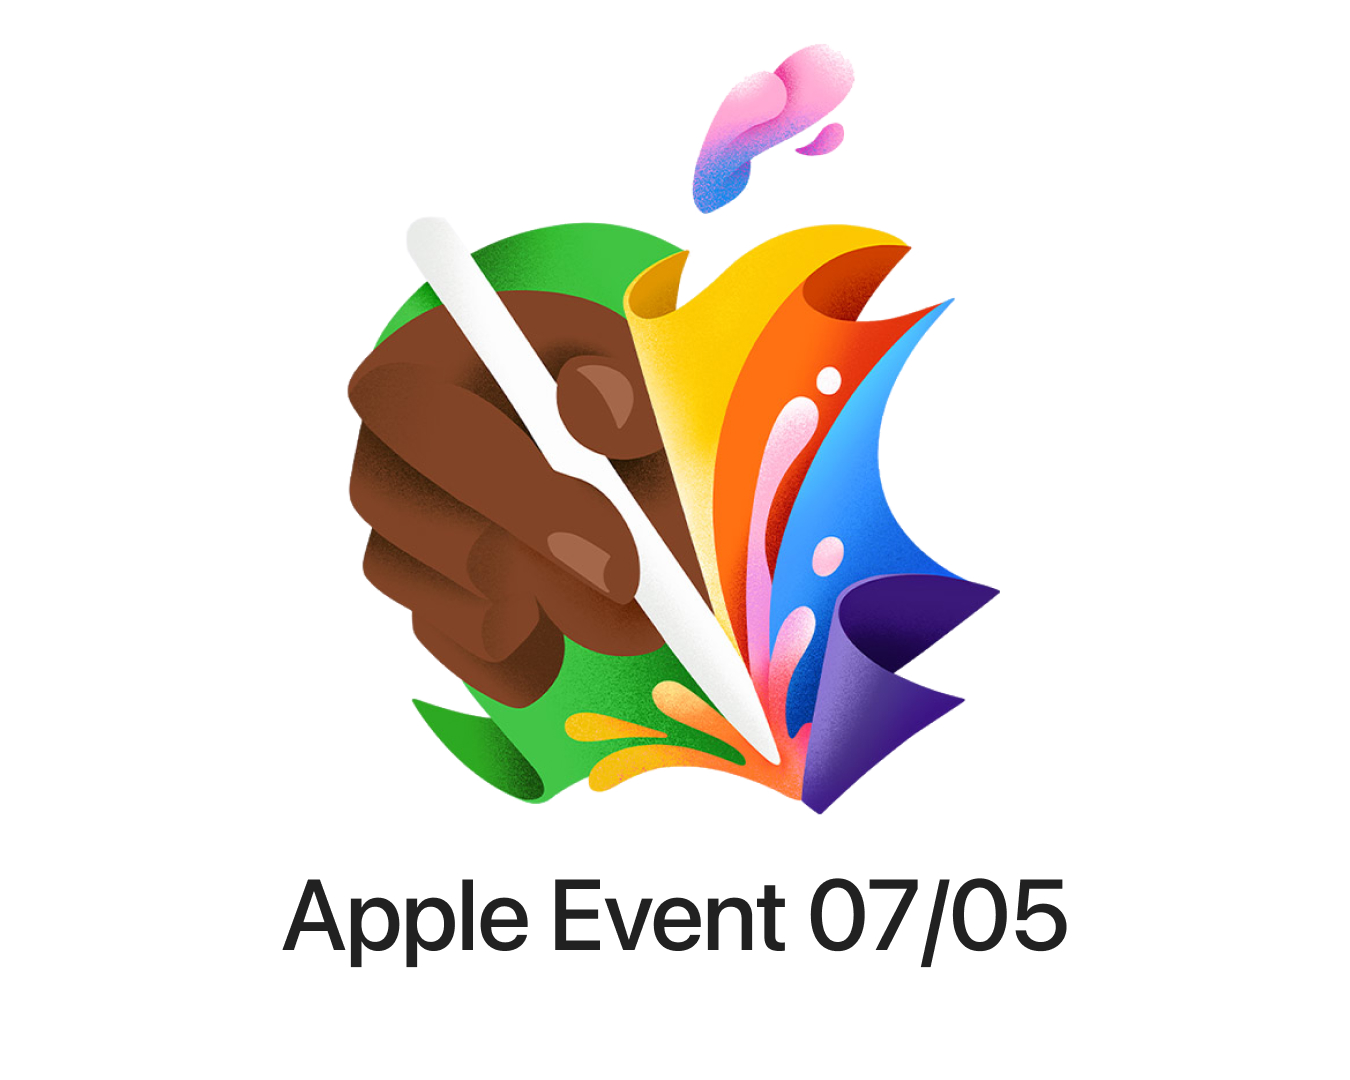 Apple Event 07/05